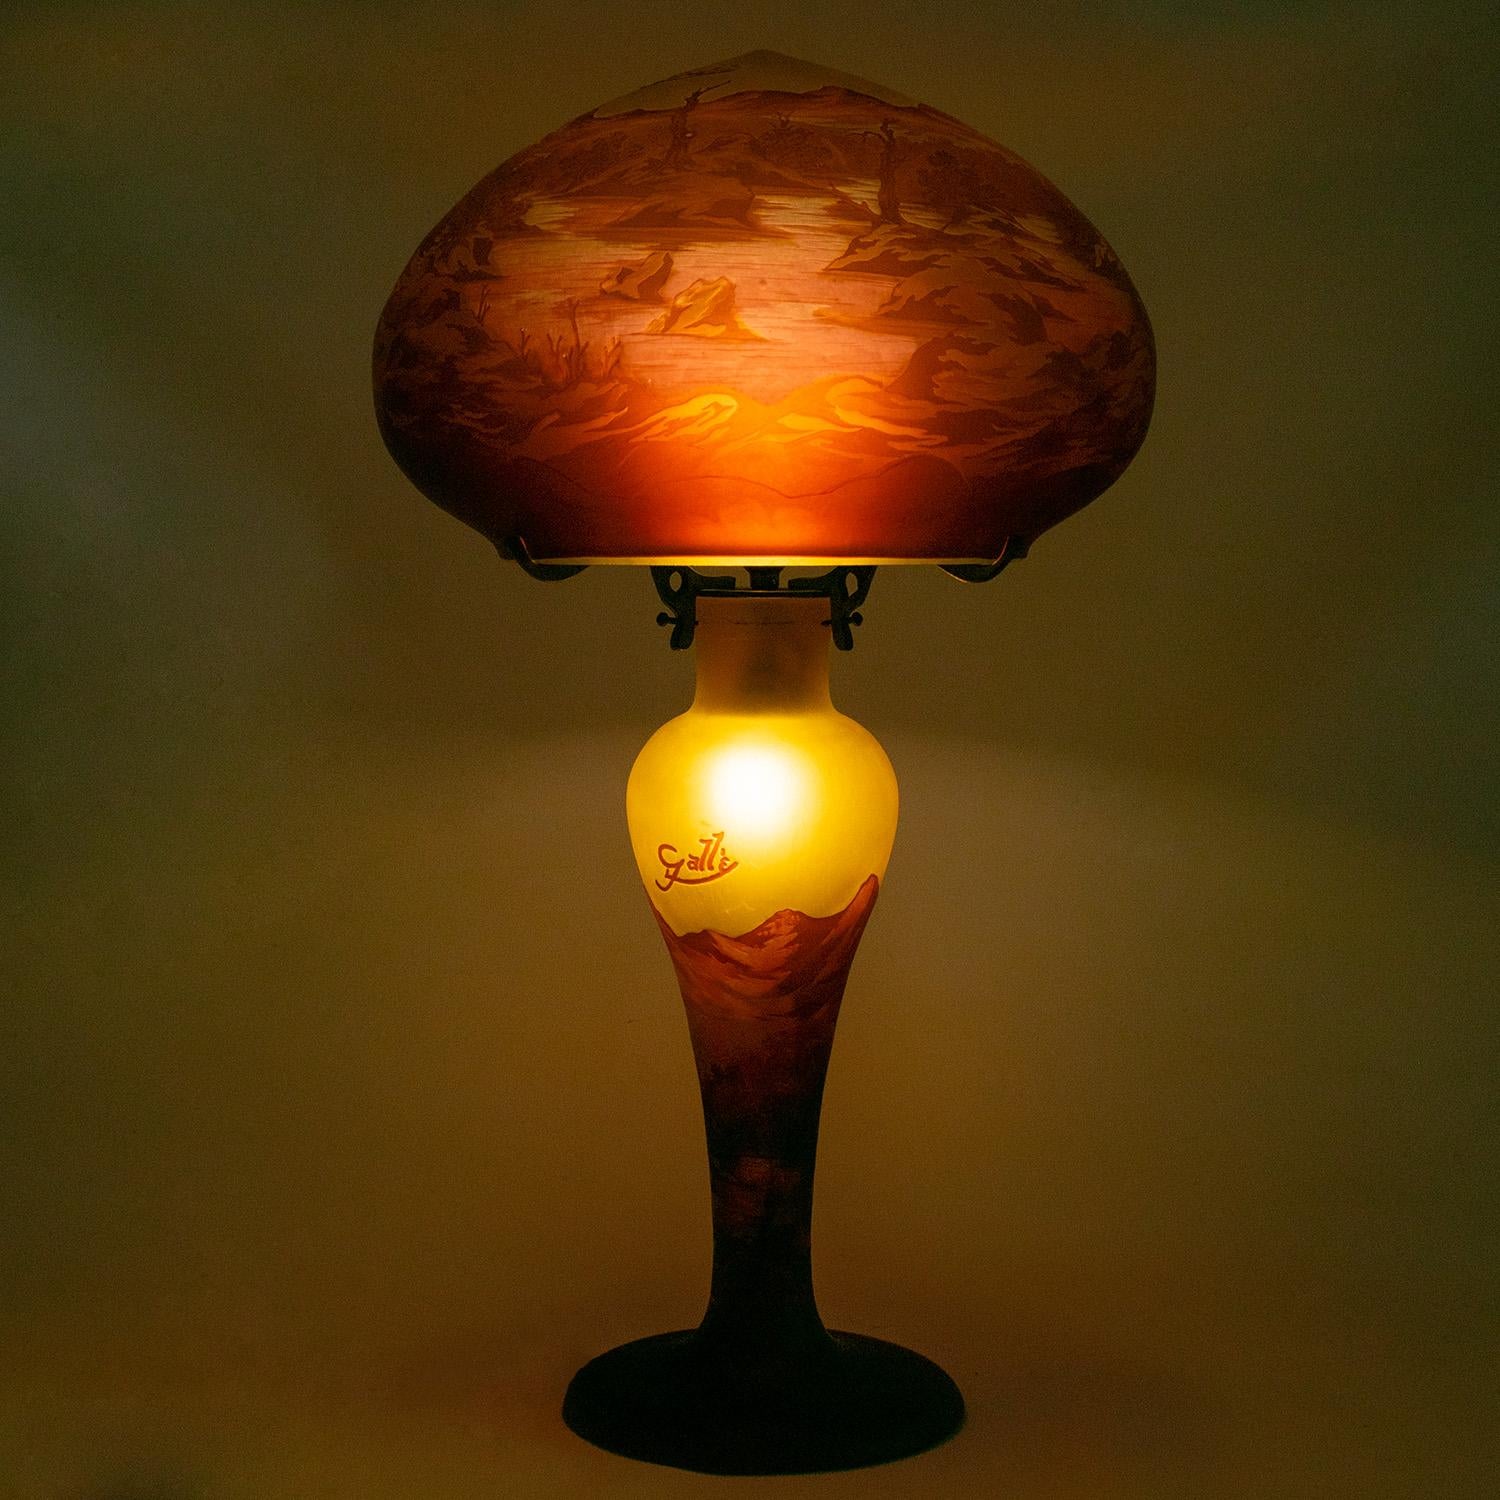 Gallè Tip - Impressive Large ART NOUVEAU MUSHROOM LAMP in multilayer glass For Sale 5